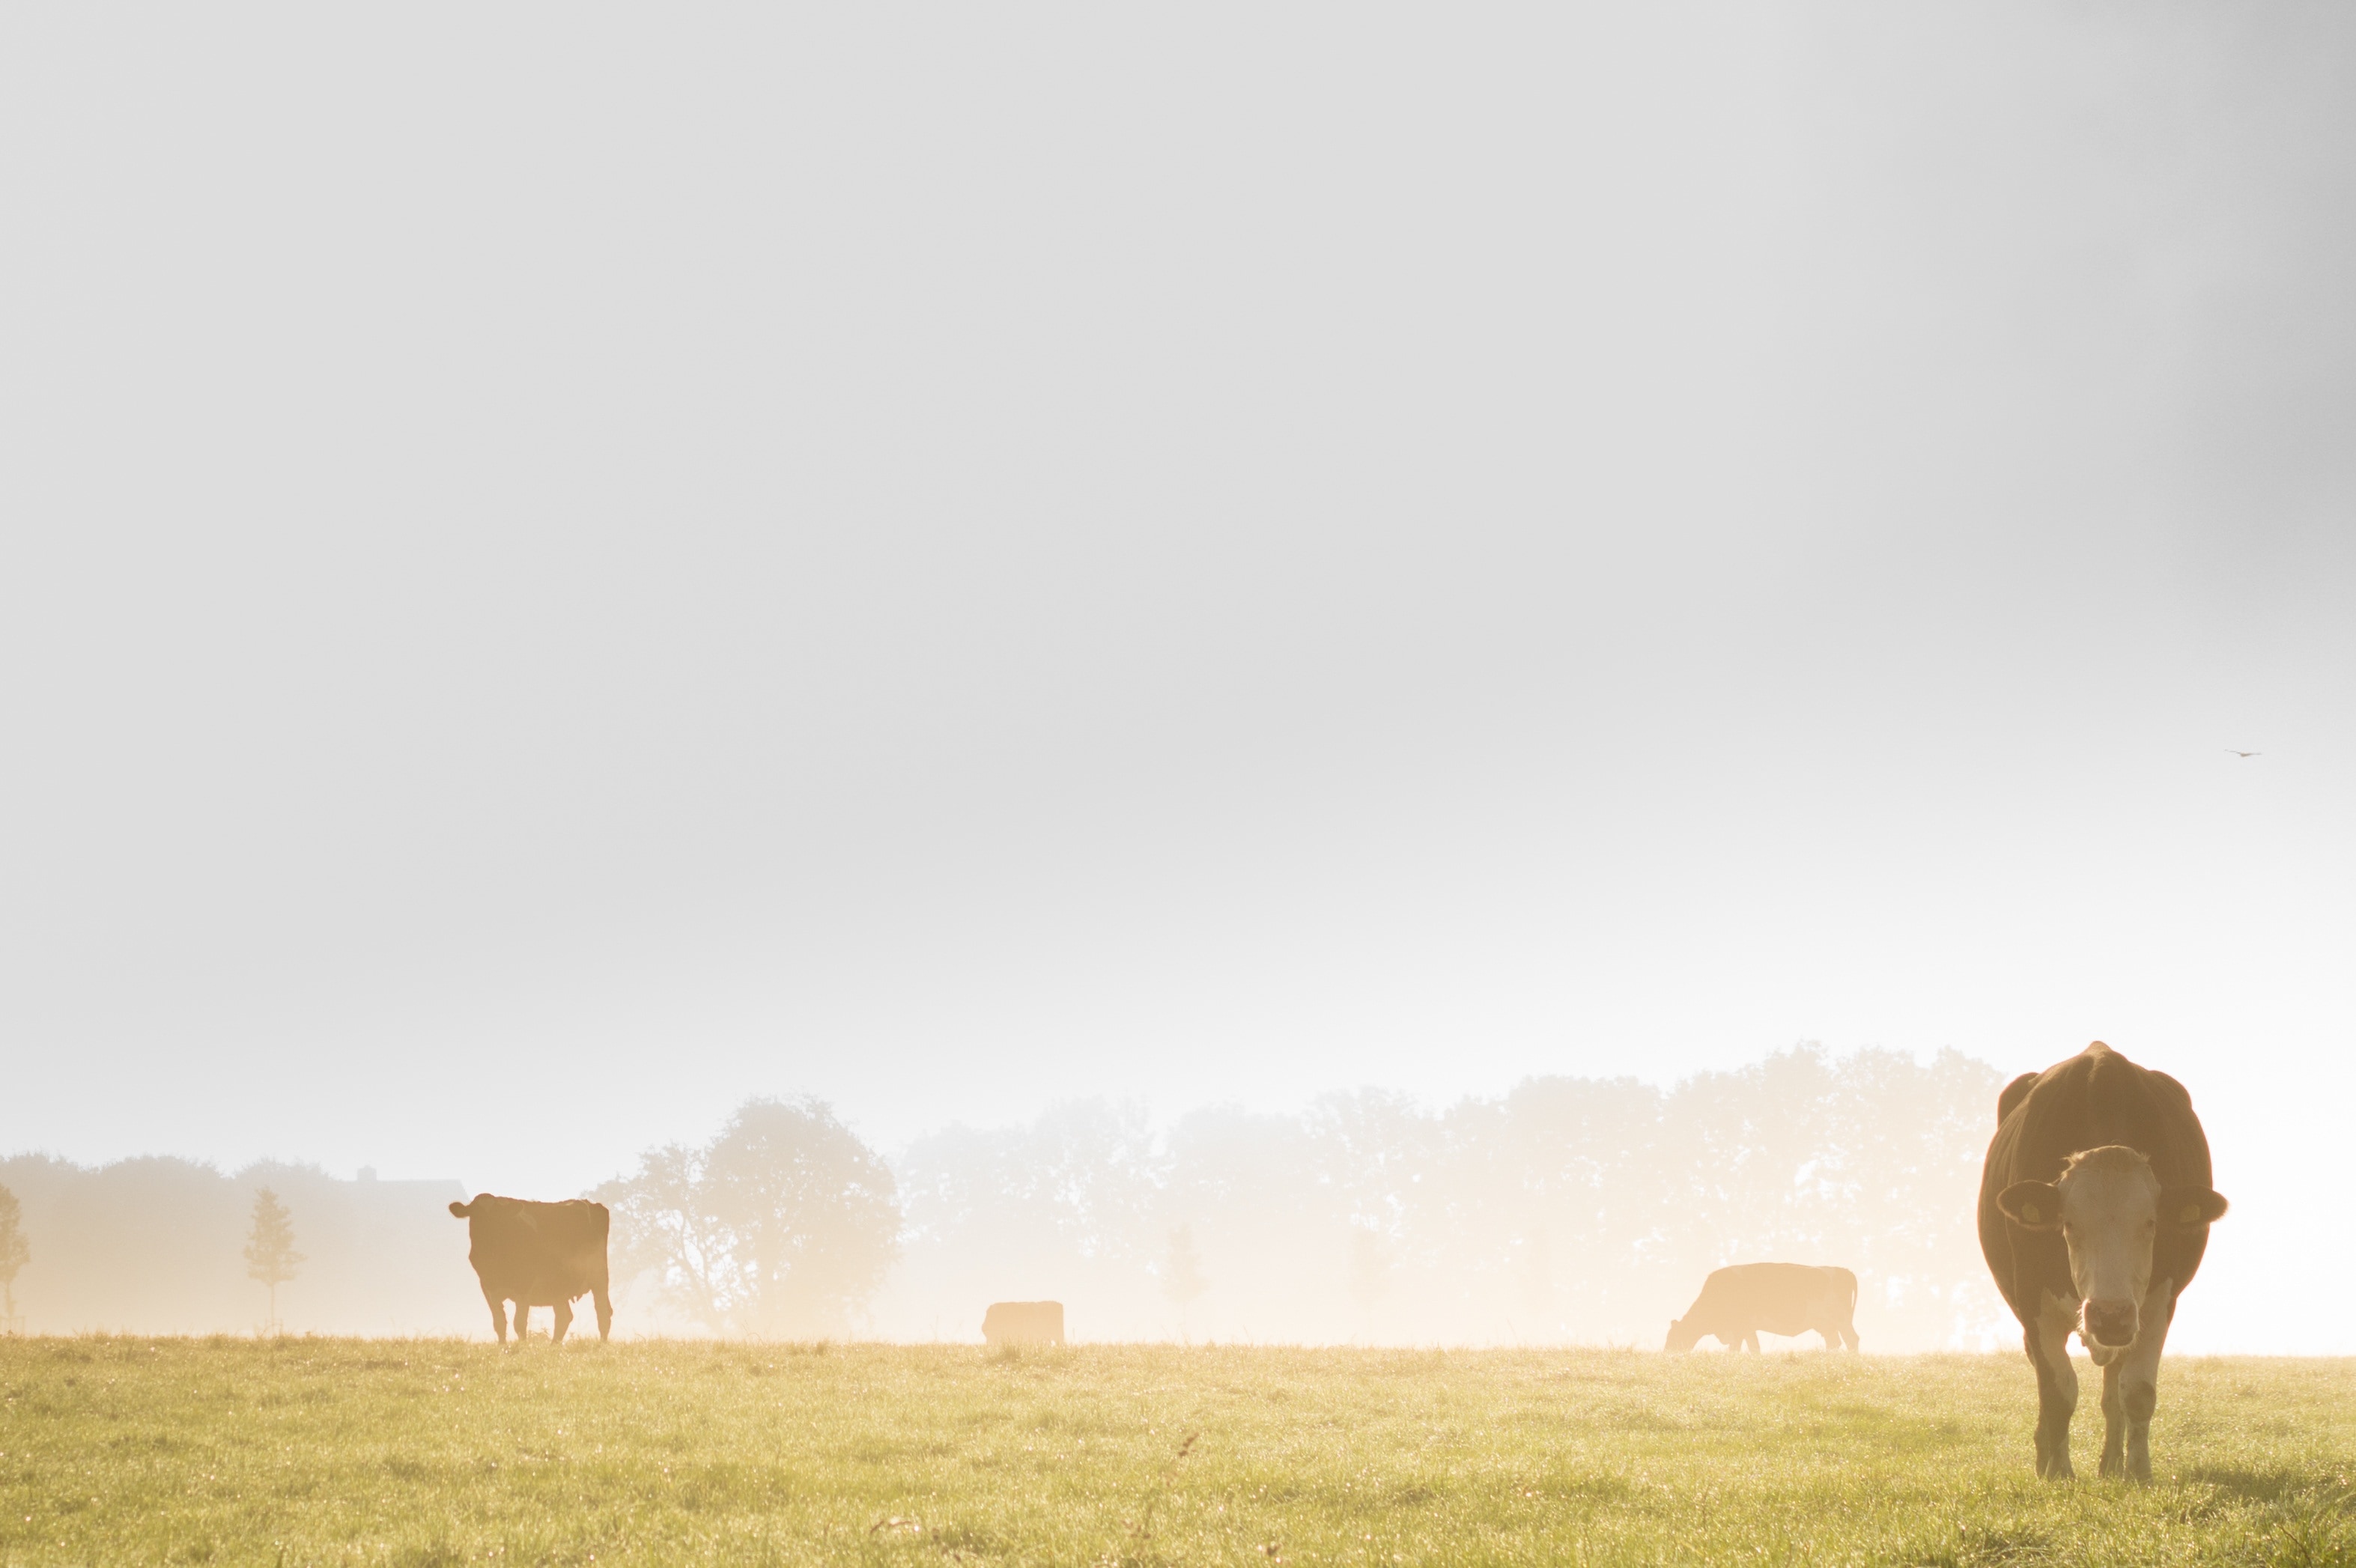 https://www.centroveterinariosanmartino.it/wp-content/uploads/2018/11/mist-cows-landscape-fog-pasture-wallpaper.jpg